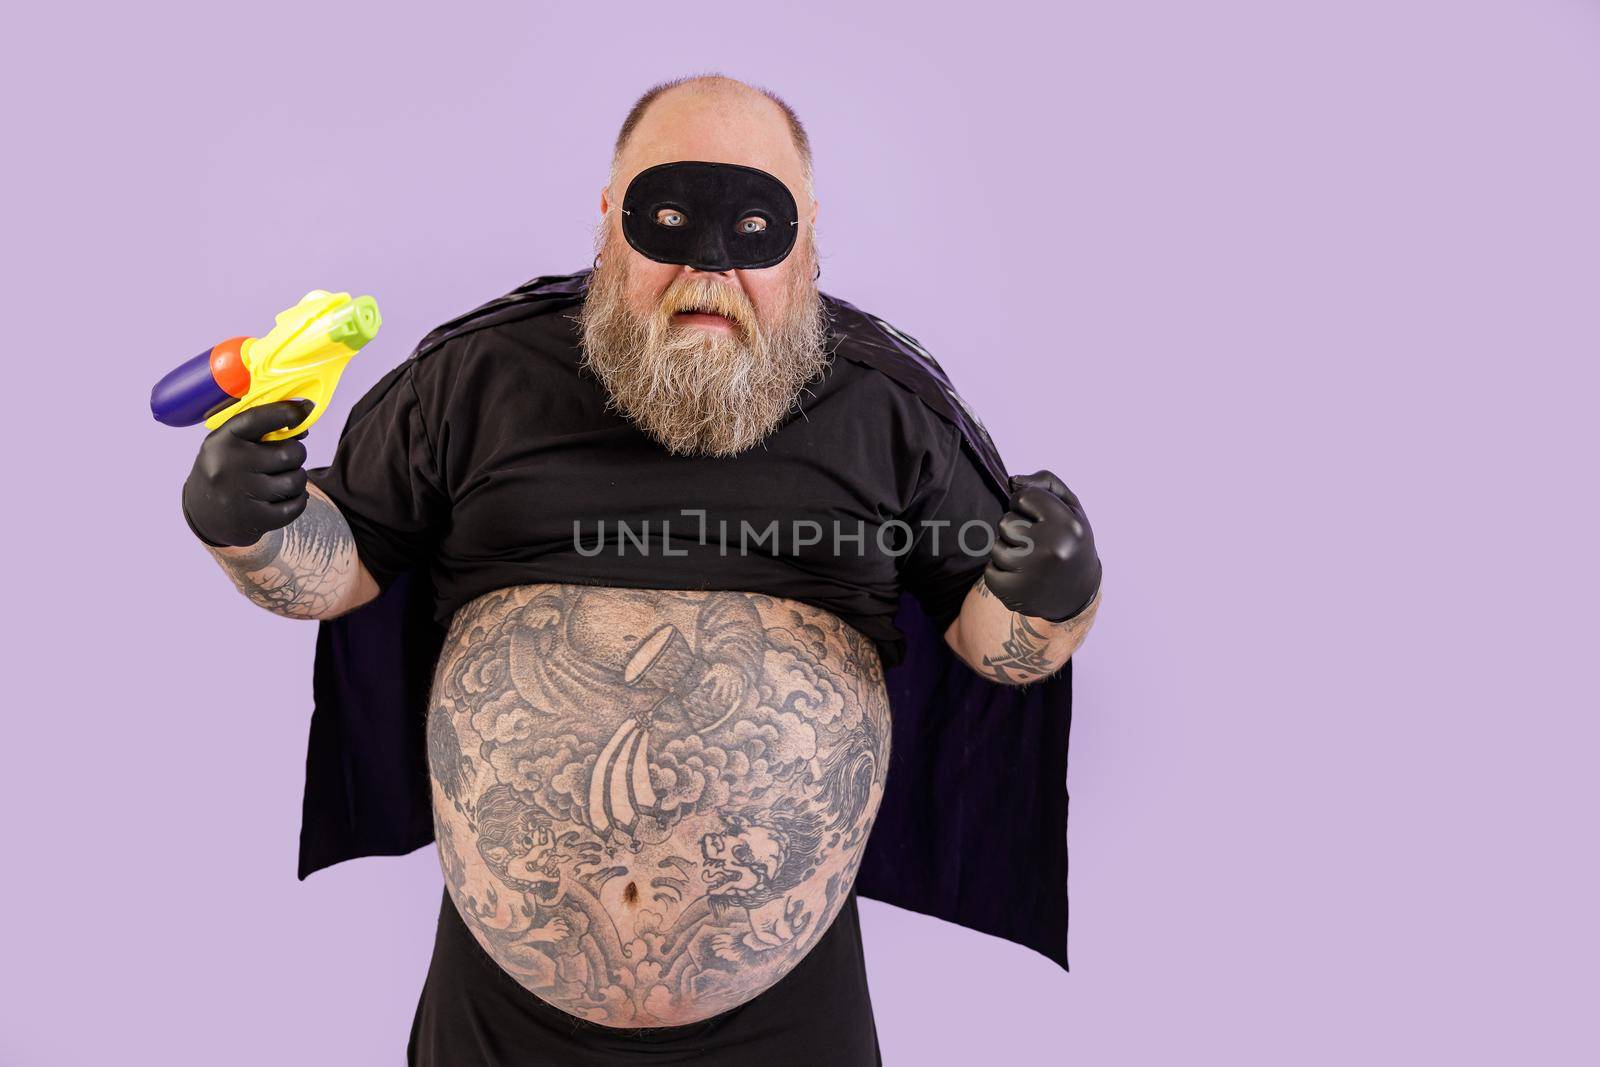 Funny evil obese man in carnival costume holds toy blaster posing on purple background by Yaroslav_astakhov